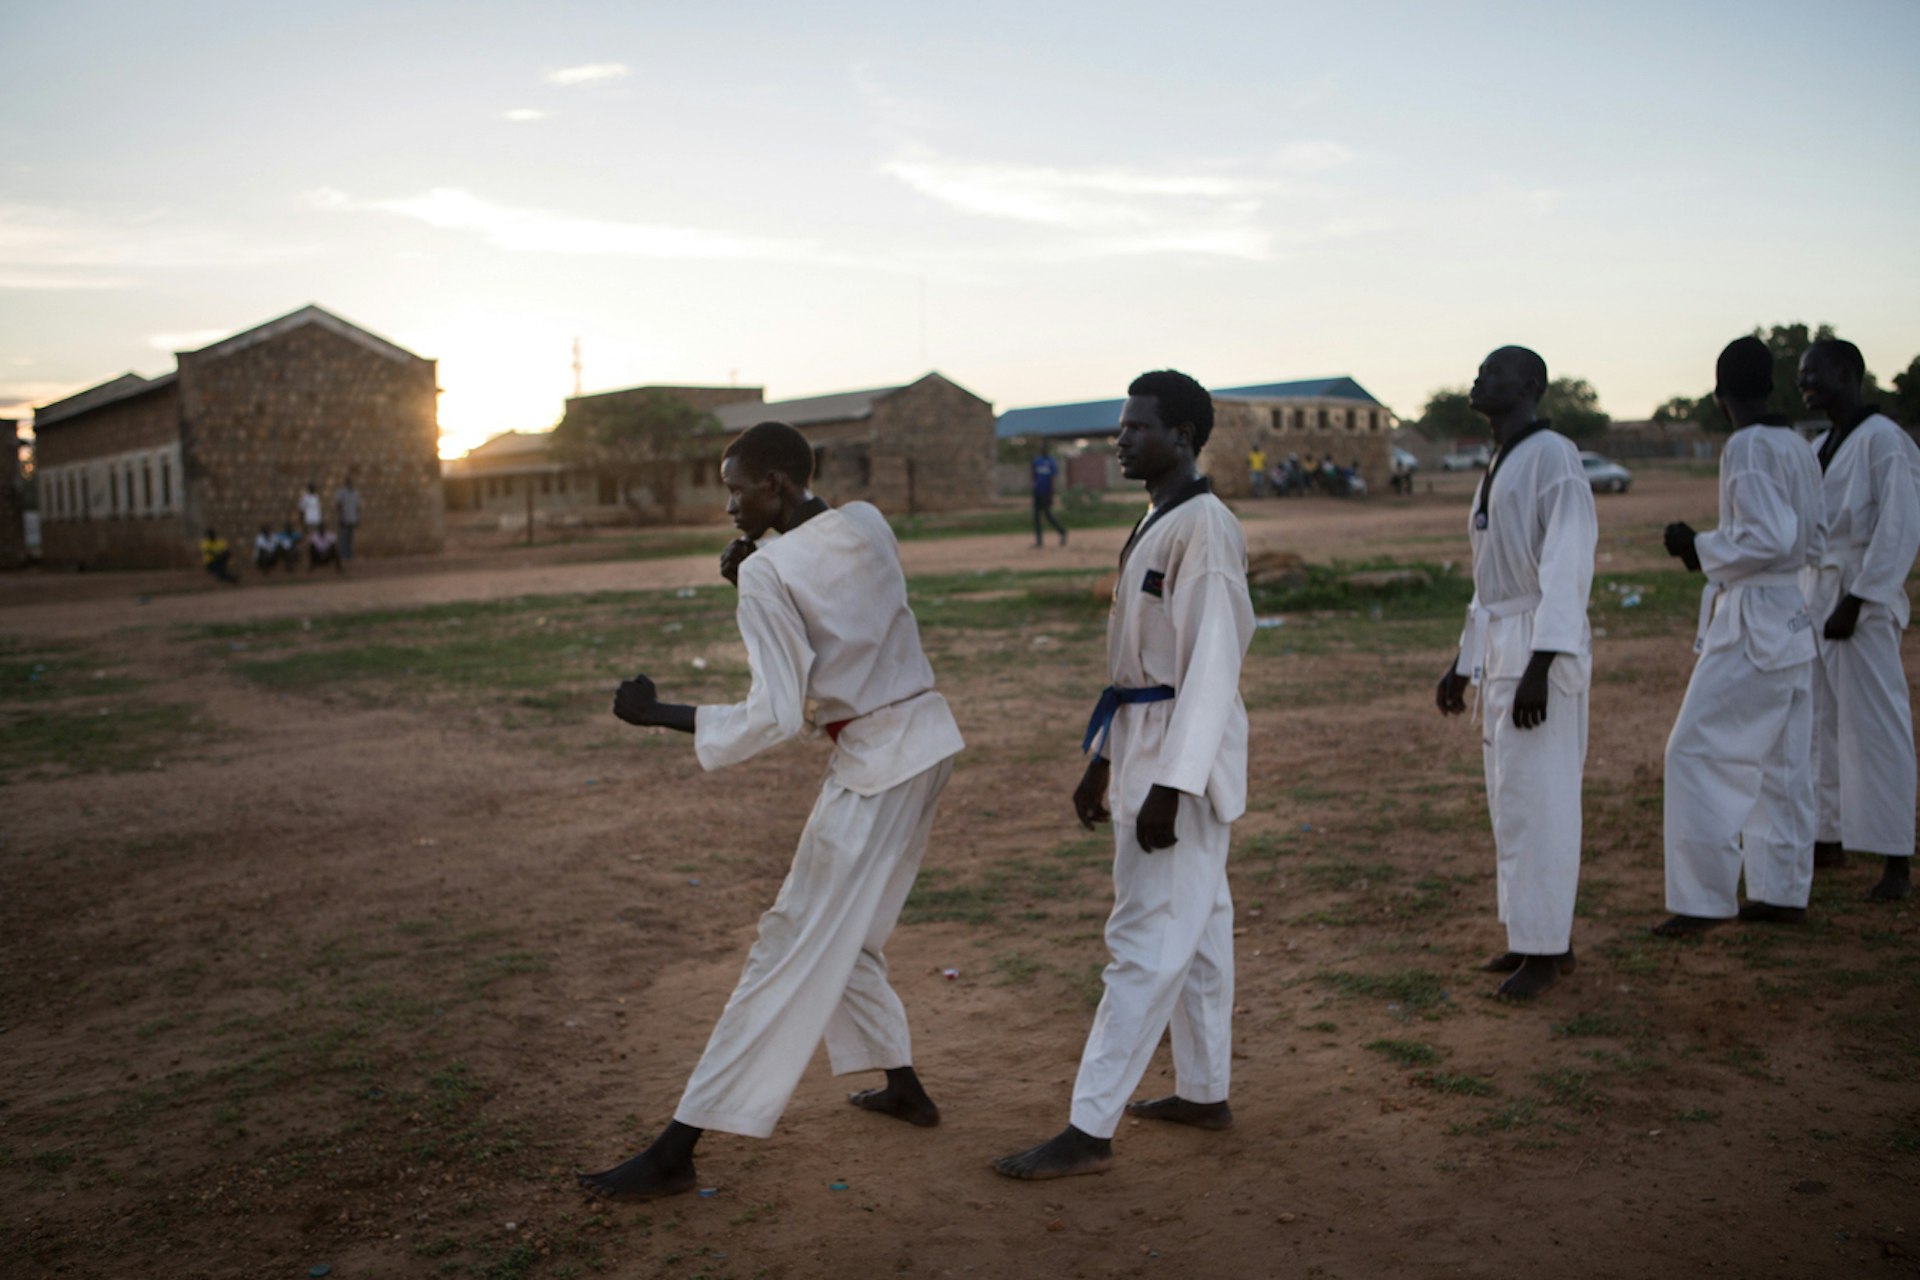 The Bolok Taekwondo Club train on a field in a suburb of Juba – one of the city's few public recreational spaces.